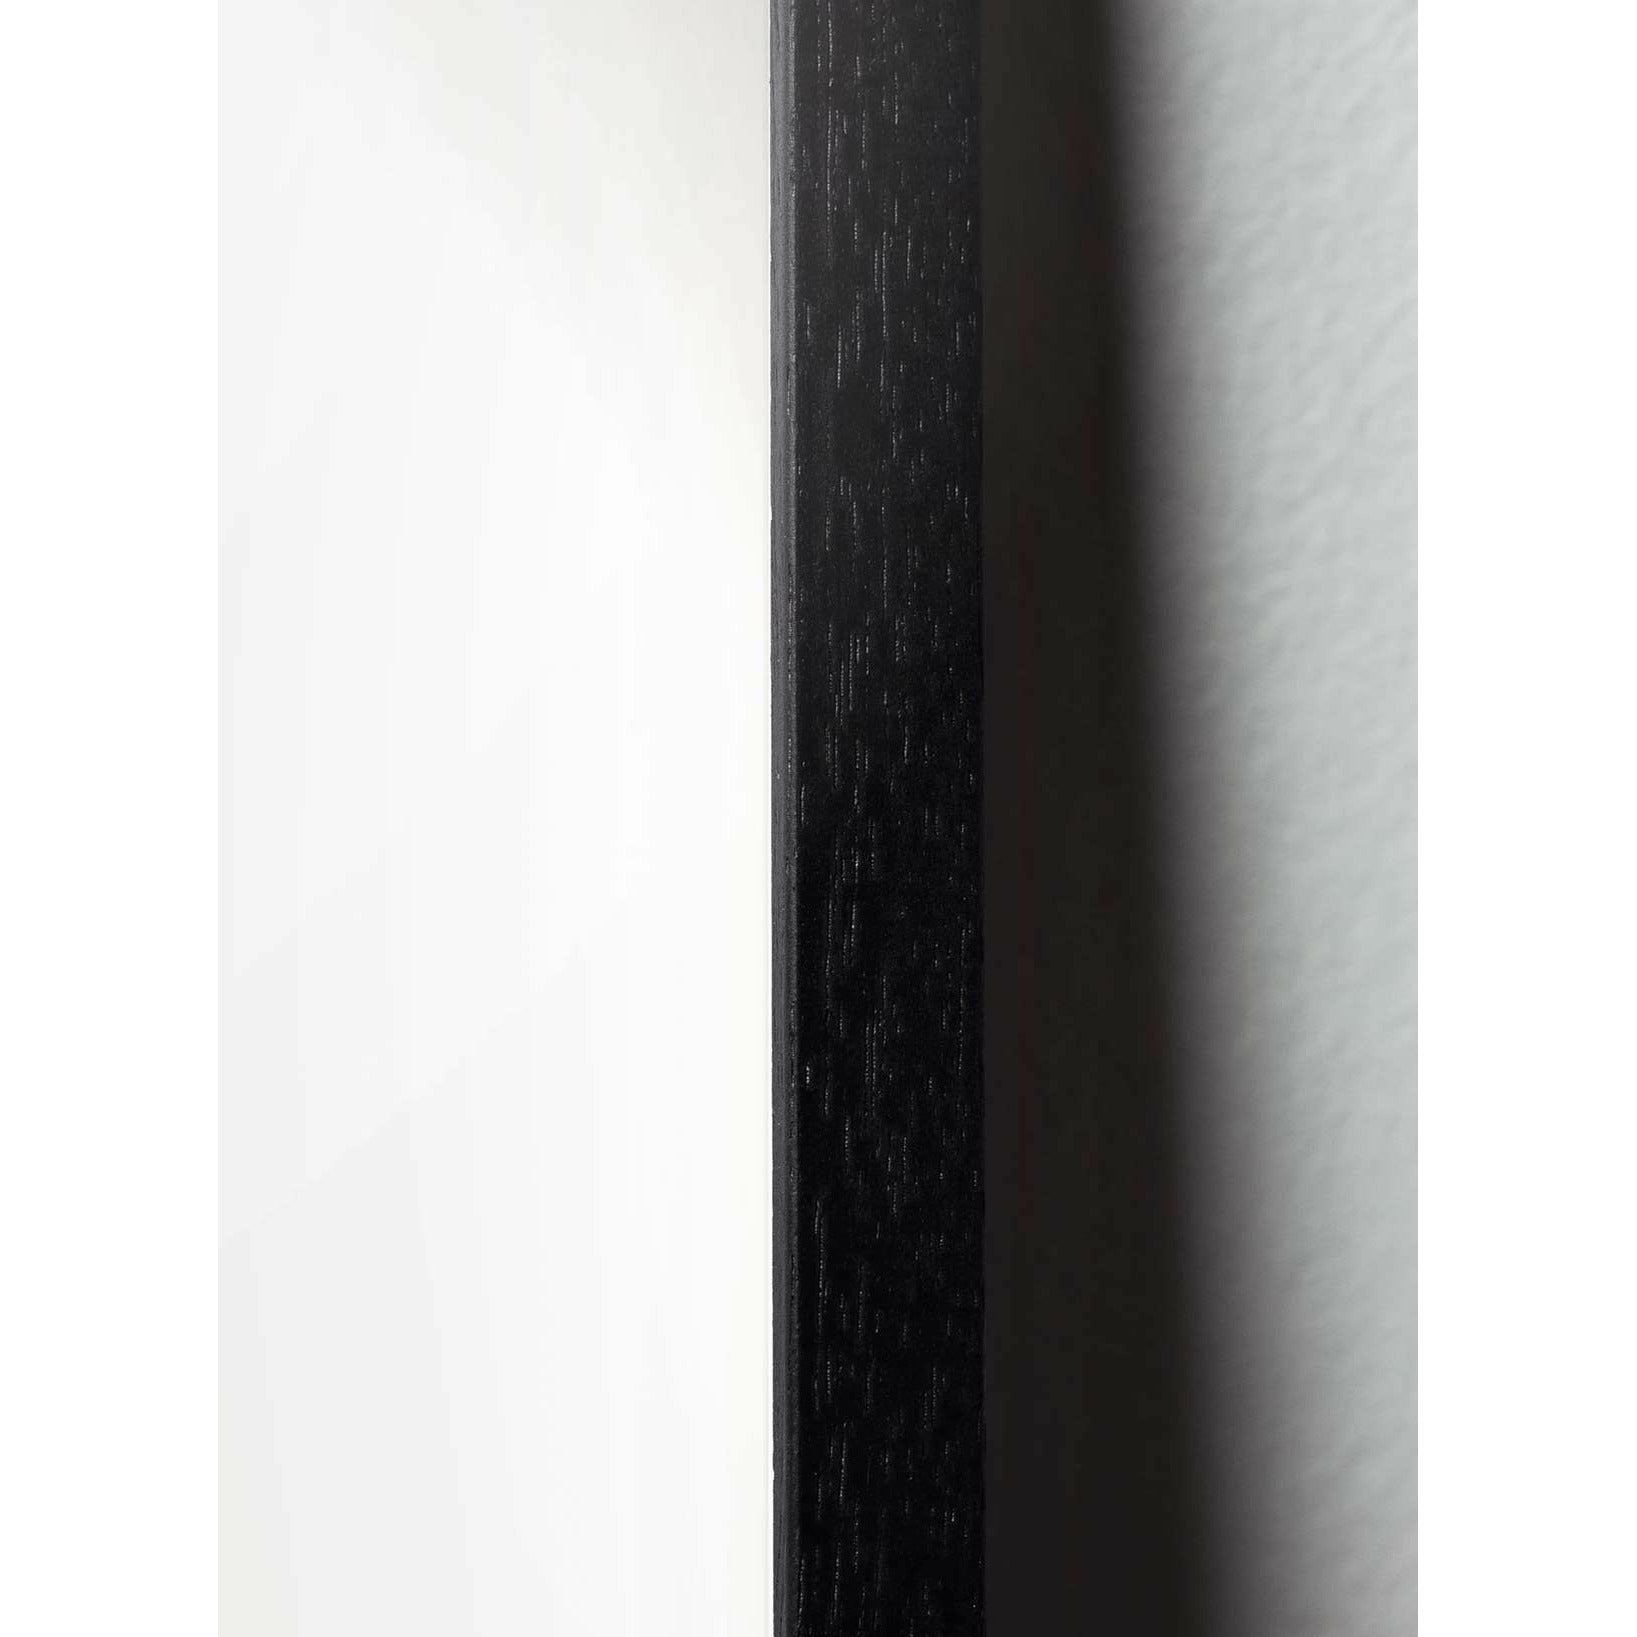 brainchild Eierfiguren Poster, frame gemaakt van zwart gelakt hout 50x70 cm, bruin